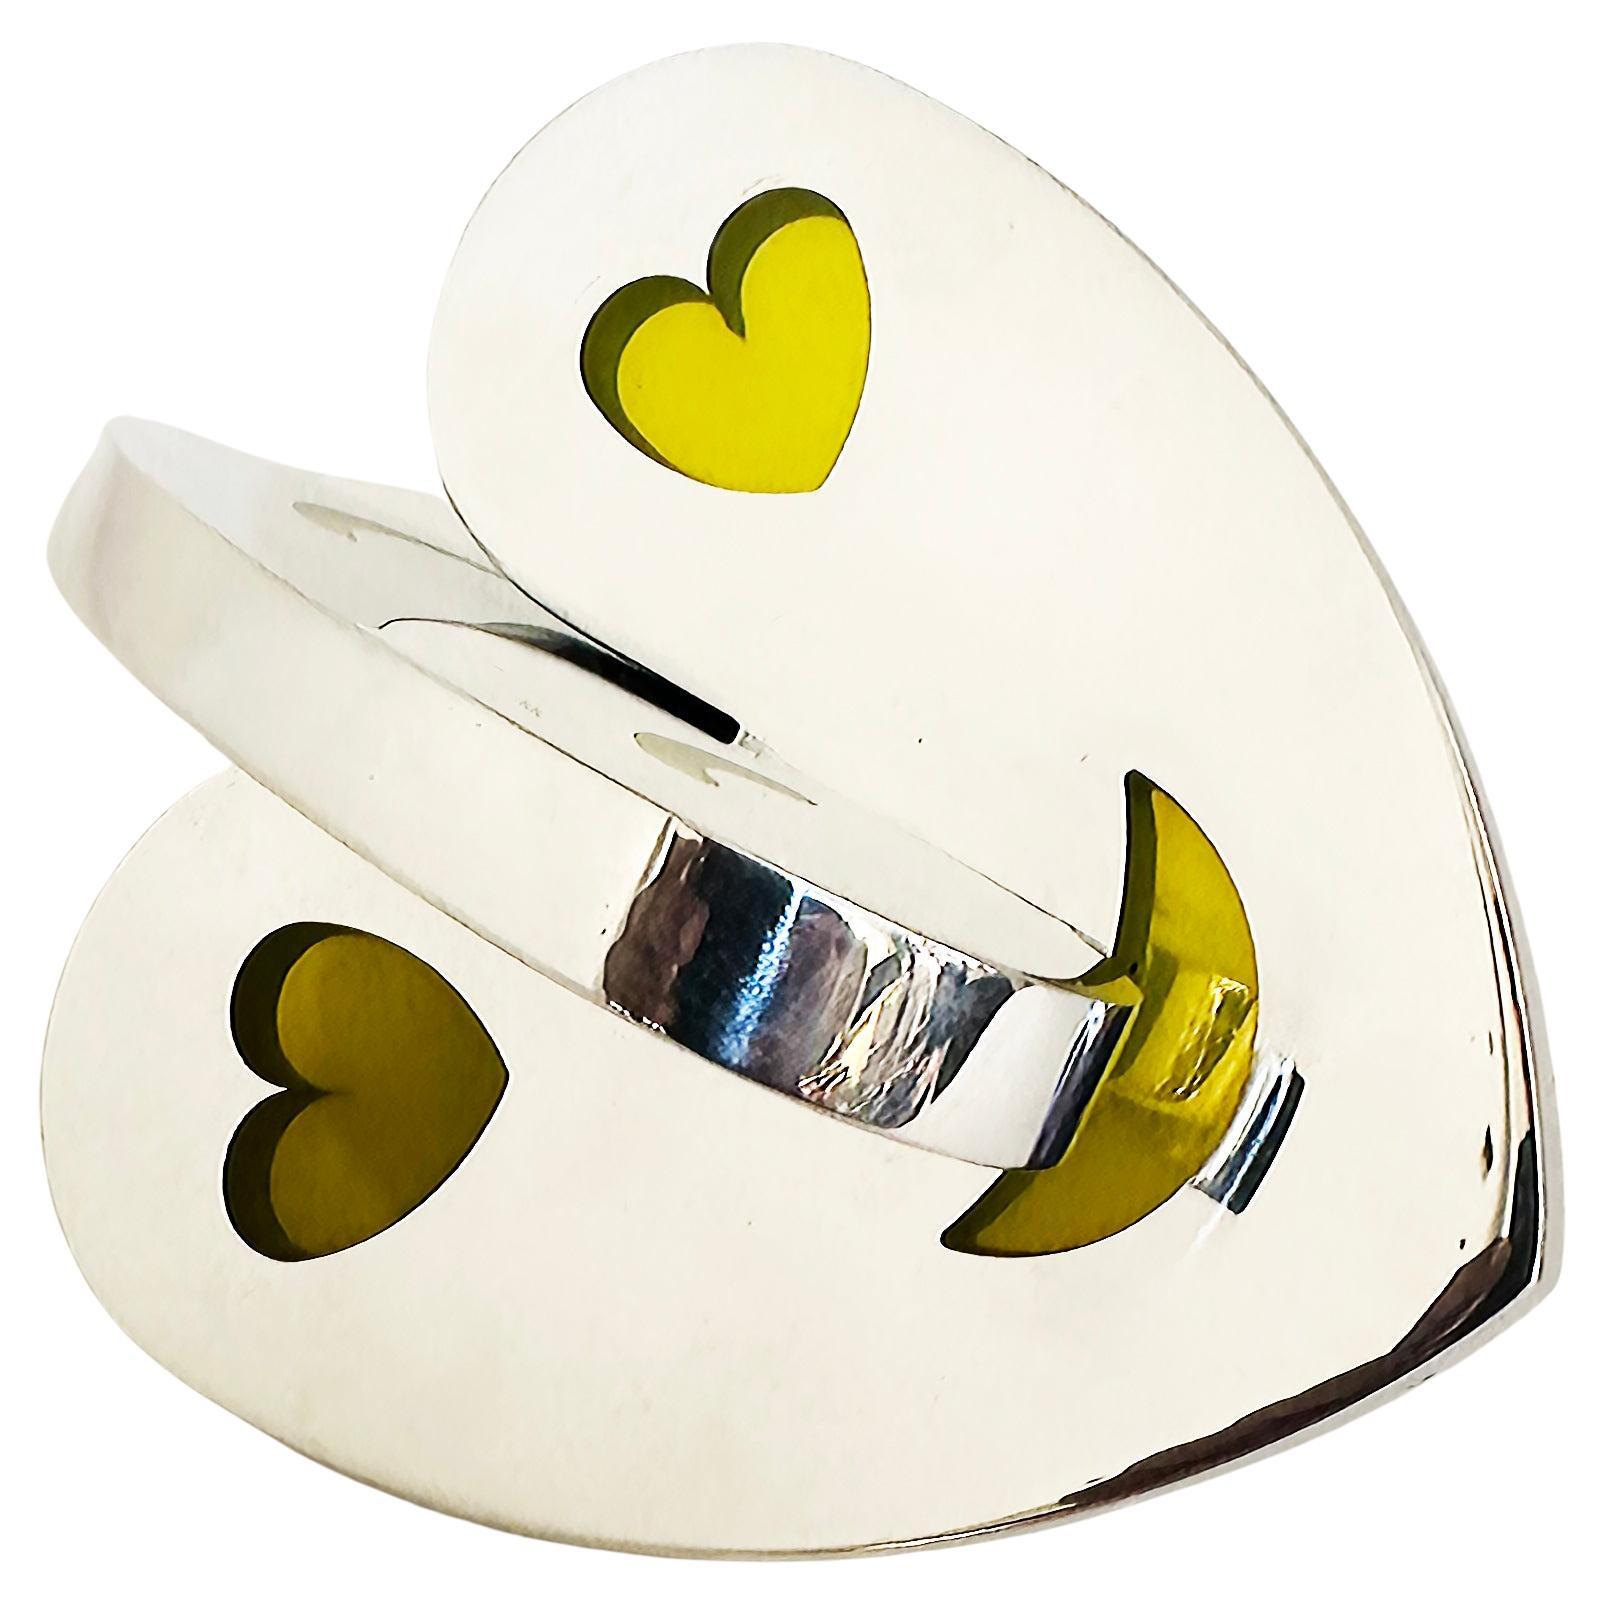   Aluminum, Epoxy Resin Interlocking Hearts Sculpture by Michael Gitter For Sale